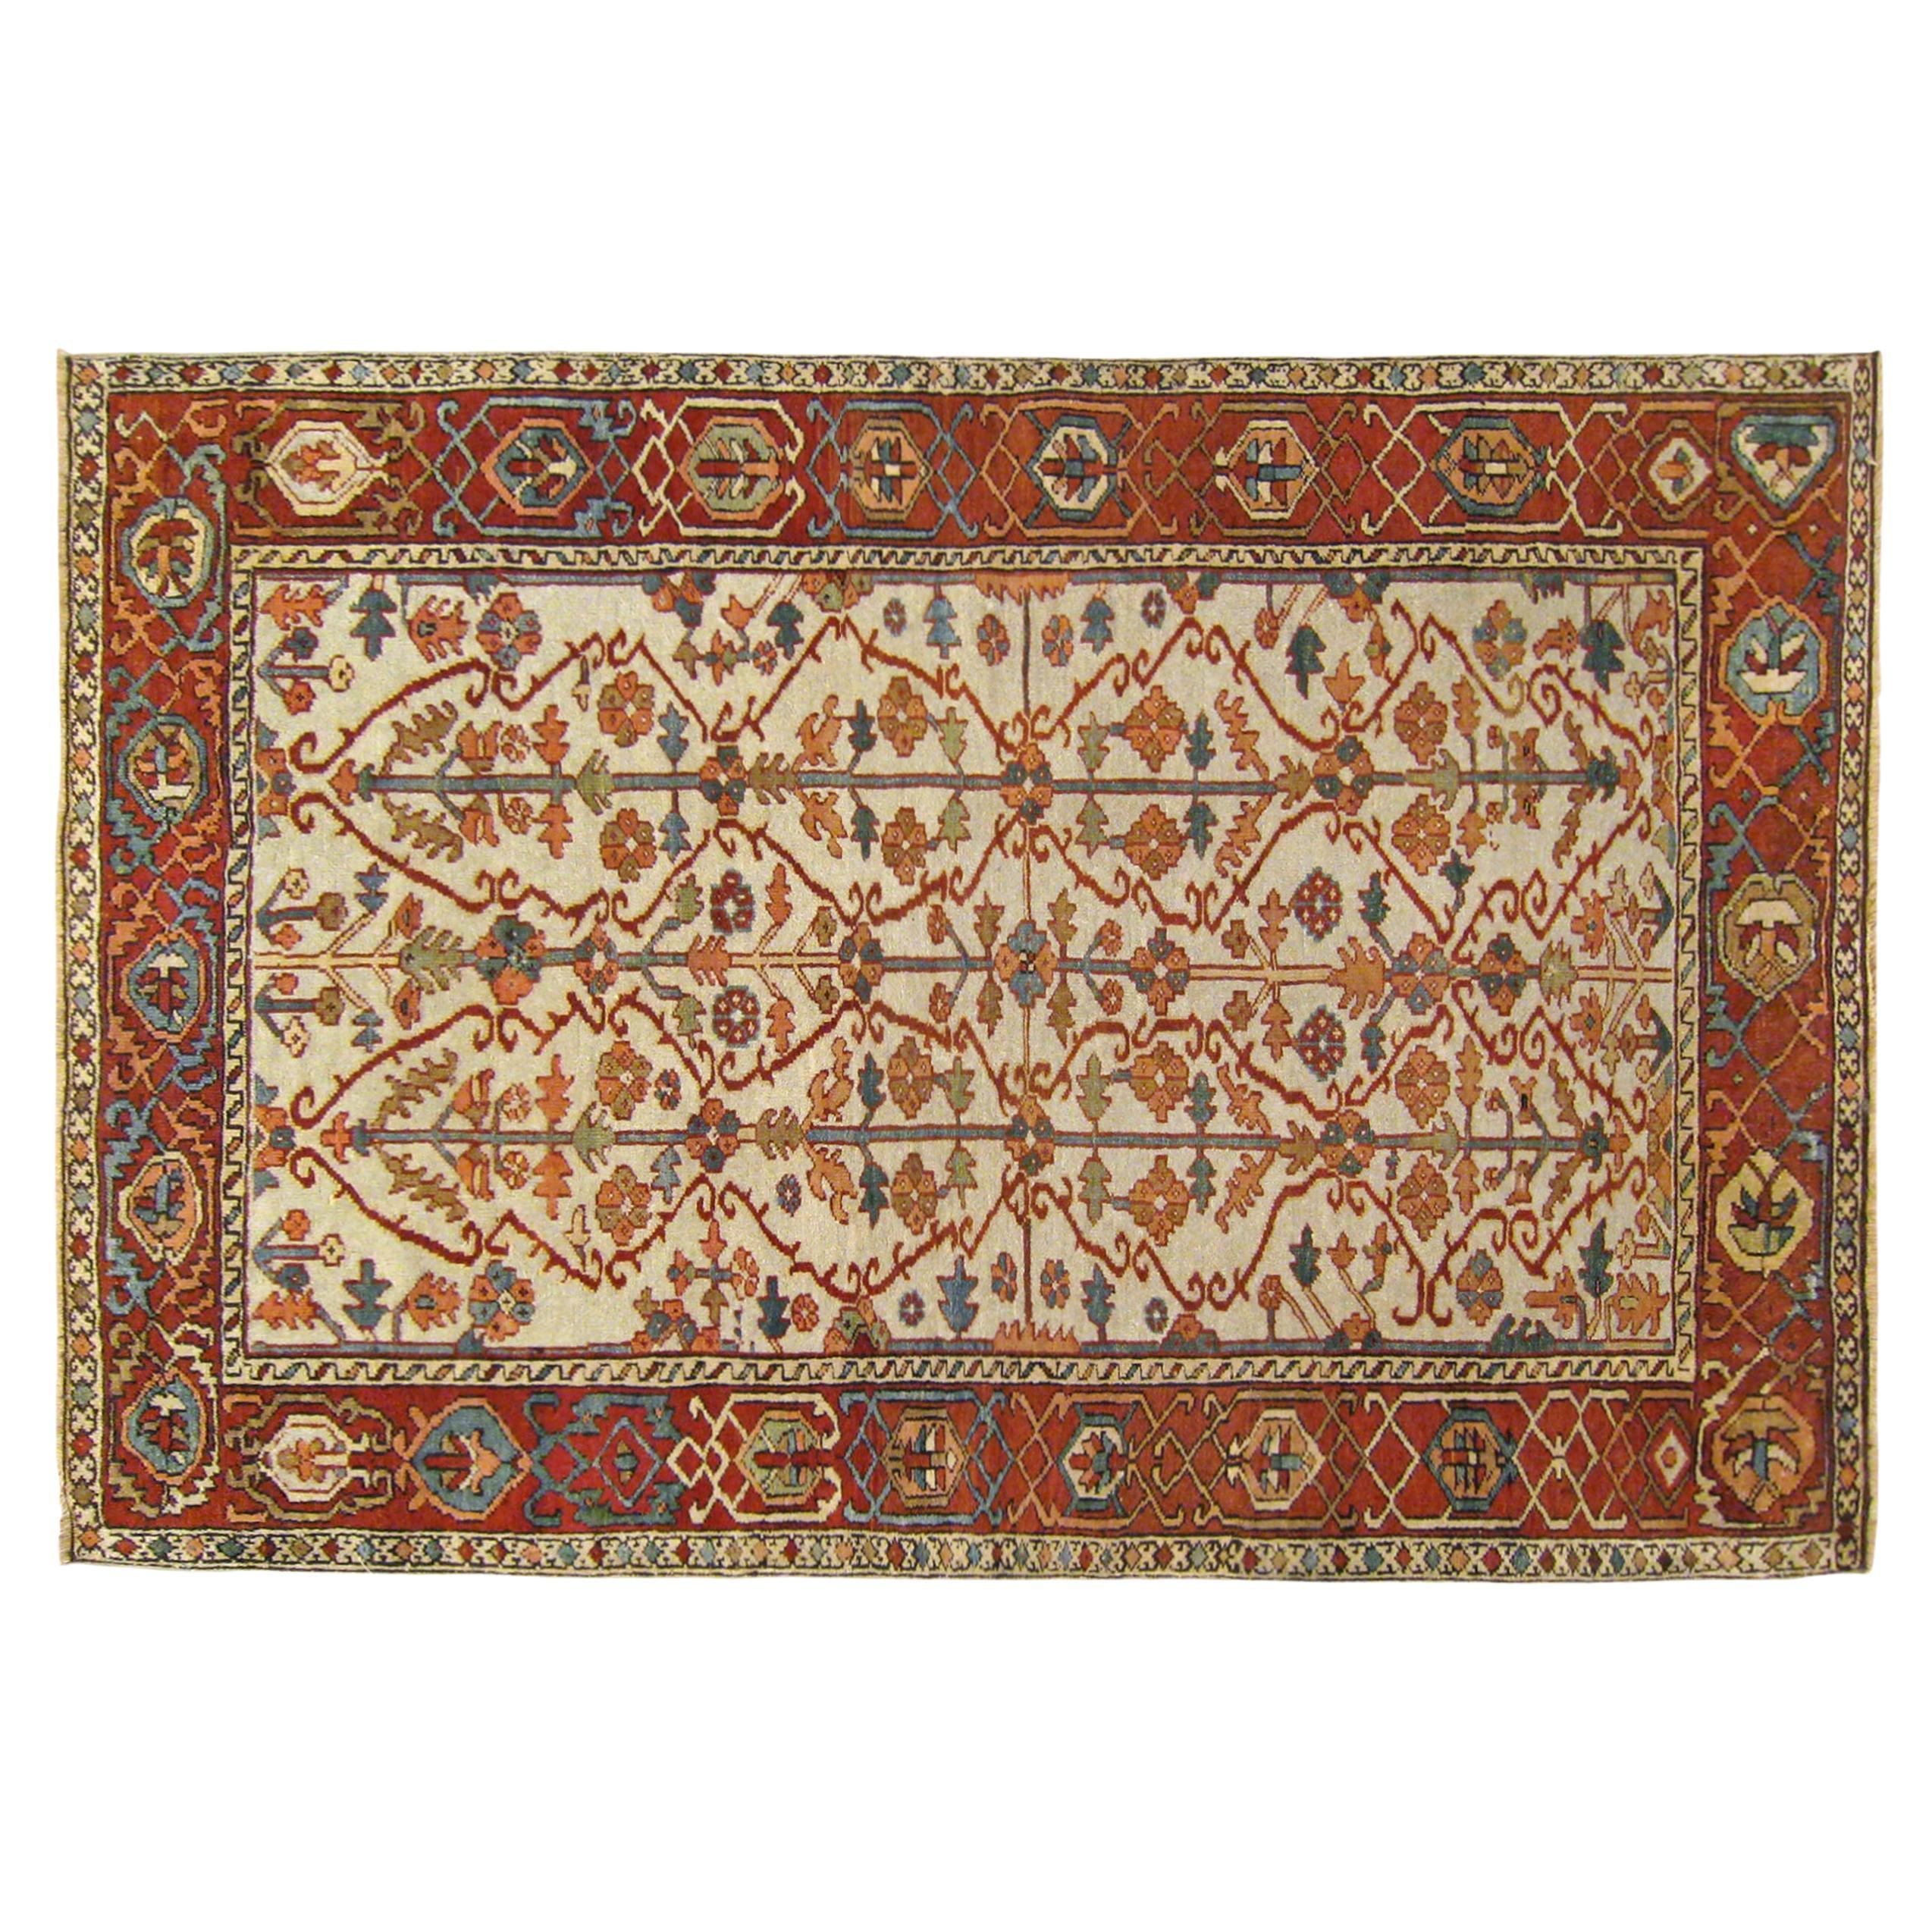 Antique Persian Serapi Oriental Carpet, in Small Size, with Symmetrical Design